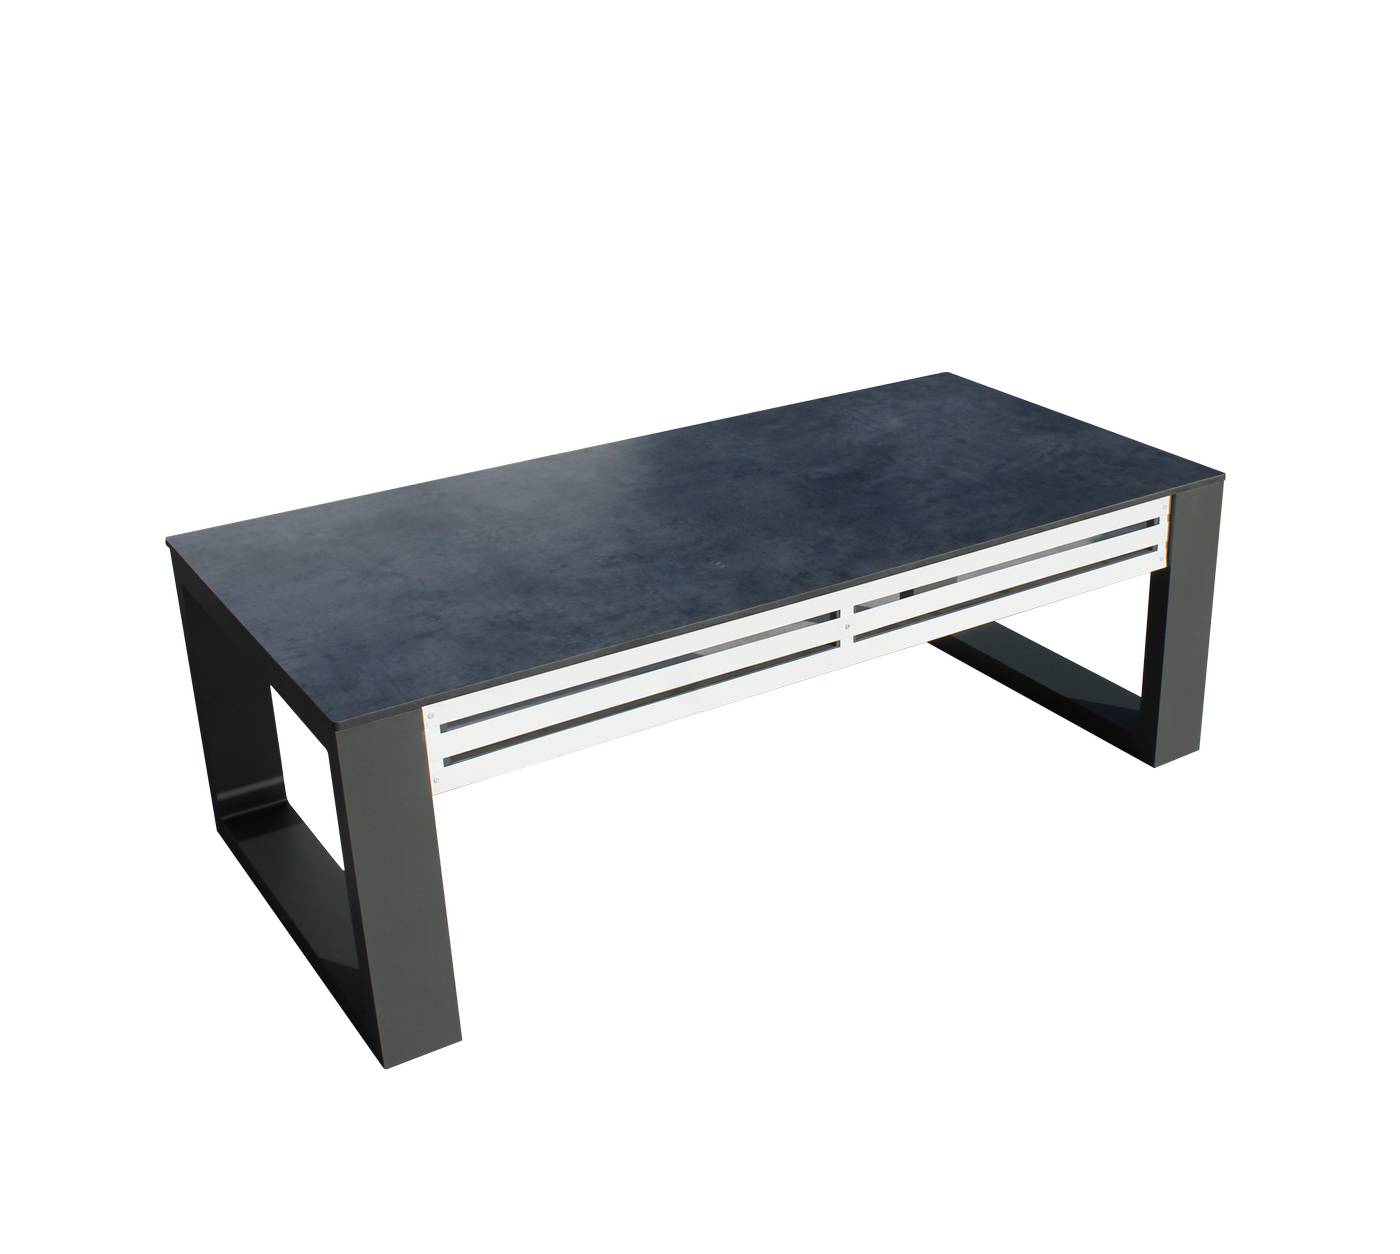 Set Aluminio Luxe Gala-7 - Exclusivo conjunto de alumnio bicolor: 1 sofá de 2 plazas + 2 sillones + 1 mesa de centro.